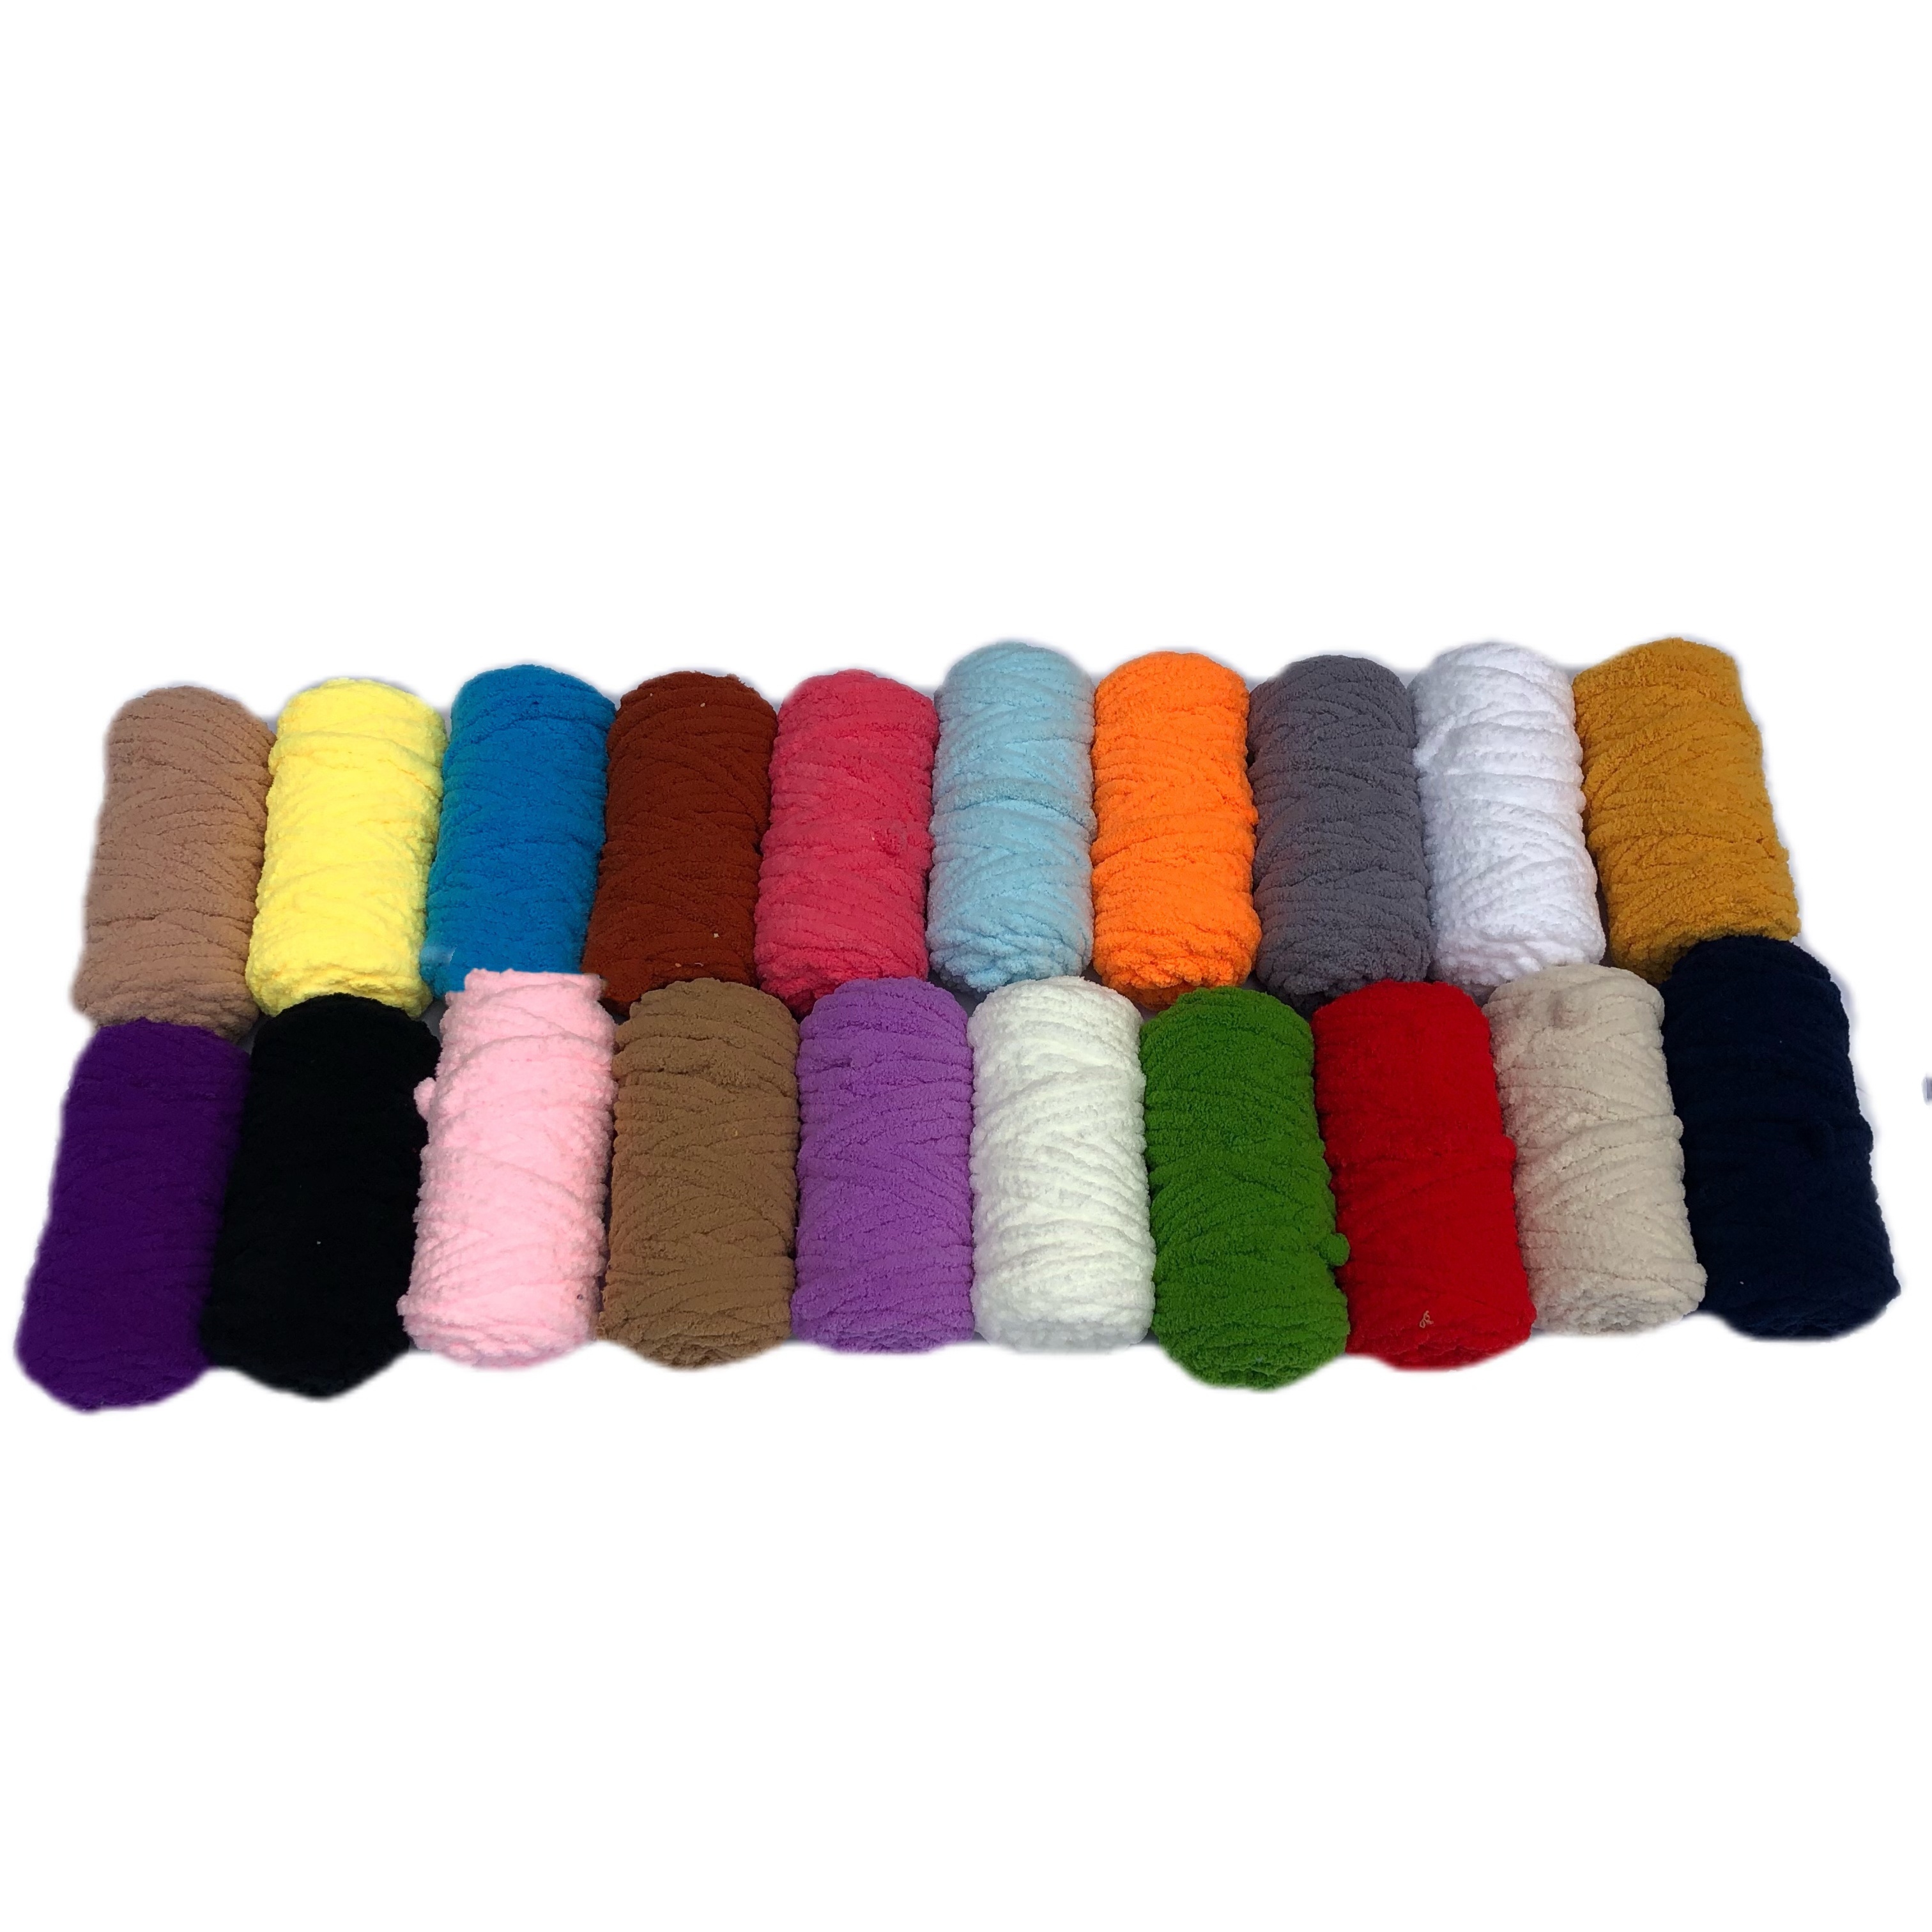  Bulk Chenille Chunky Yarn,Blanket Making Kit,White 250g  Chenille Knitting Yarn,Arm Knitting Kit,Chunky Knit Blanket Yarn,Jumbo  Knitting Yarn